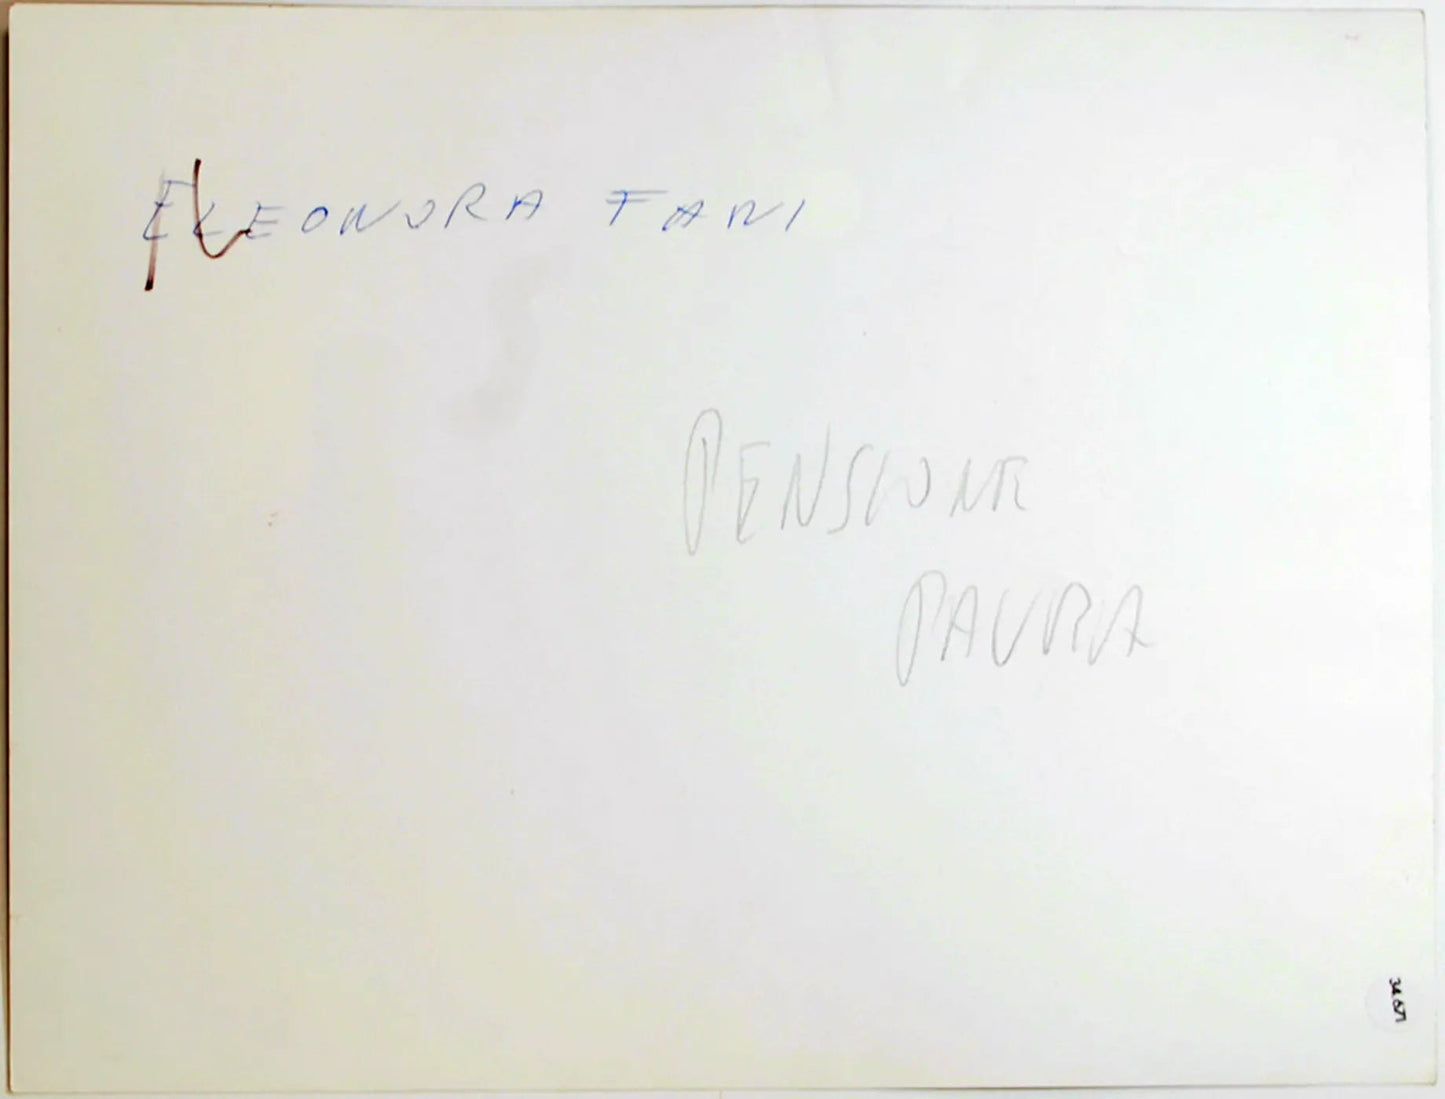 Film Pensione Paura 1978 Ft 34671 - Stampa 24x18 cm - Farabola Stampa ai sali d'argento